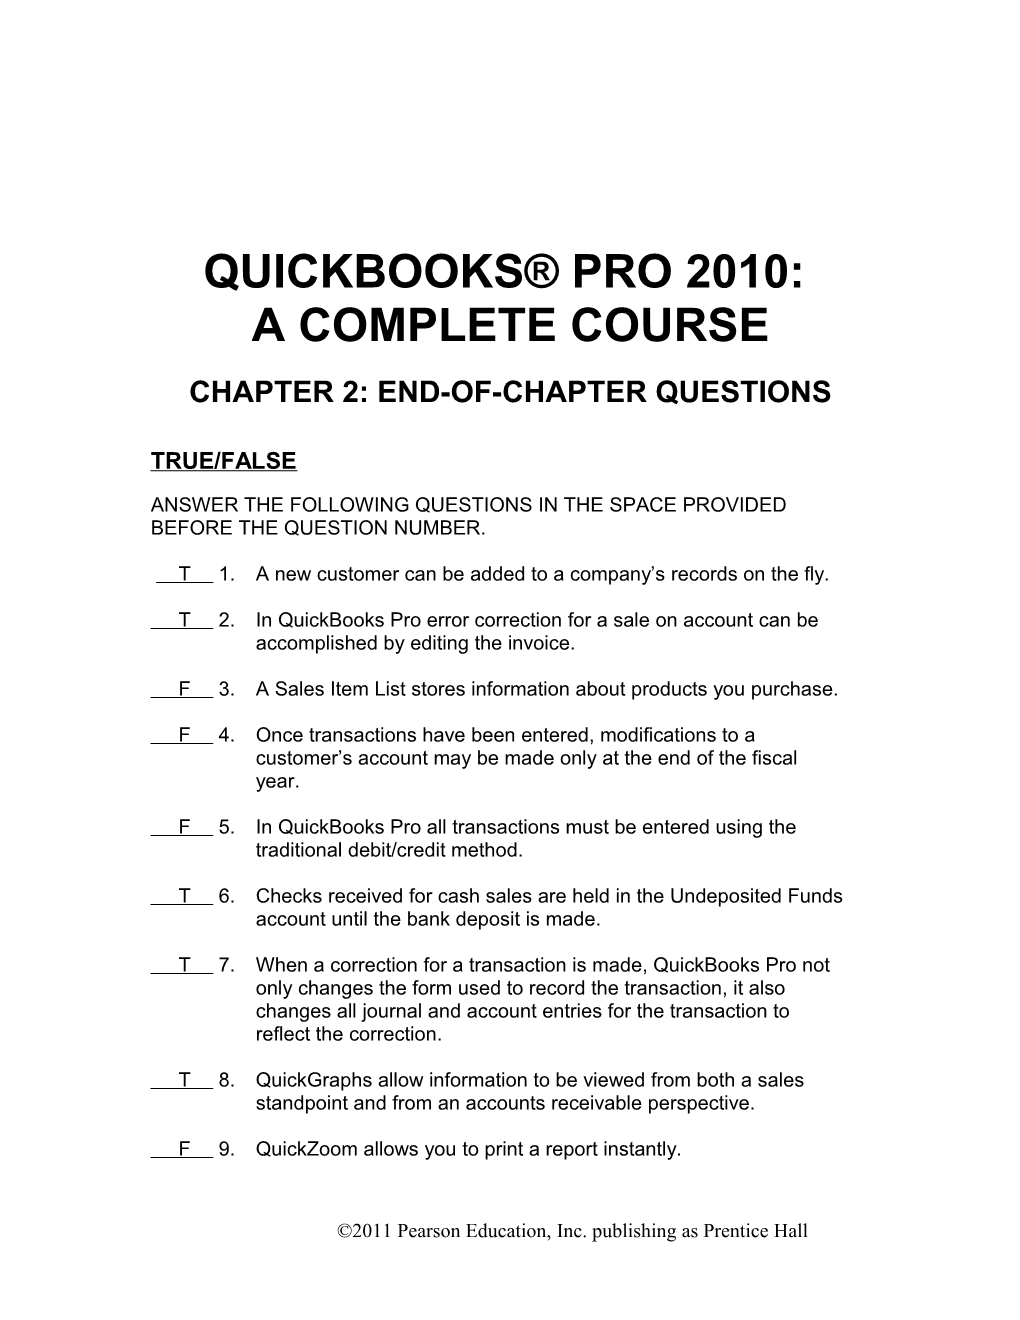 Quickbooks Pro: a Complete Course